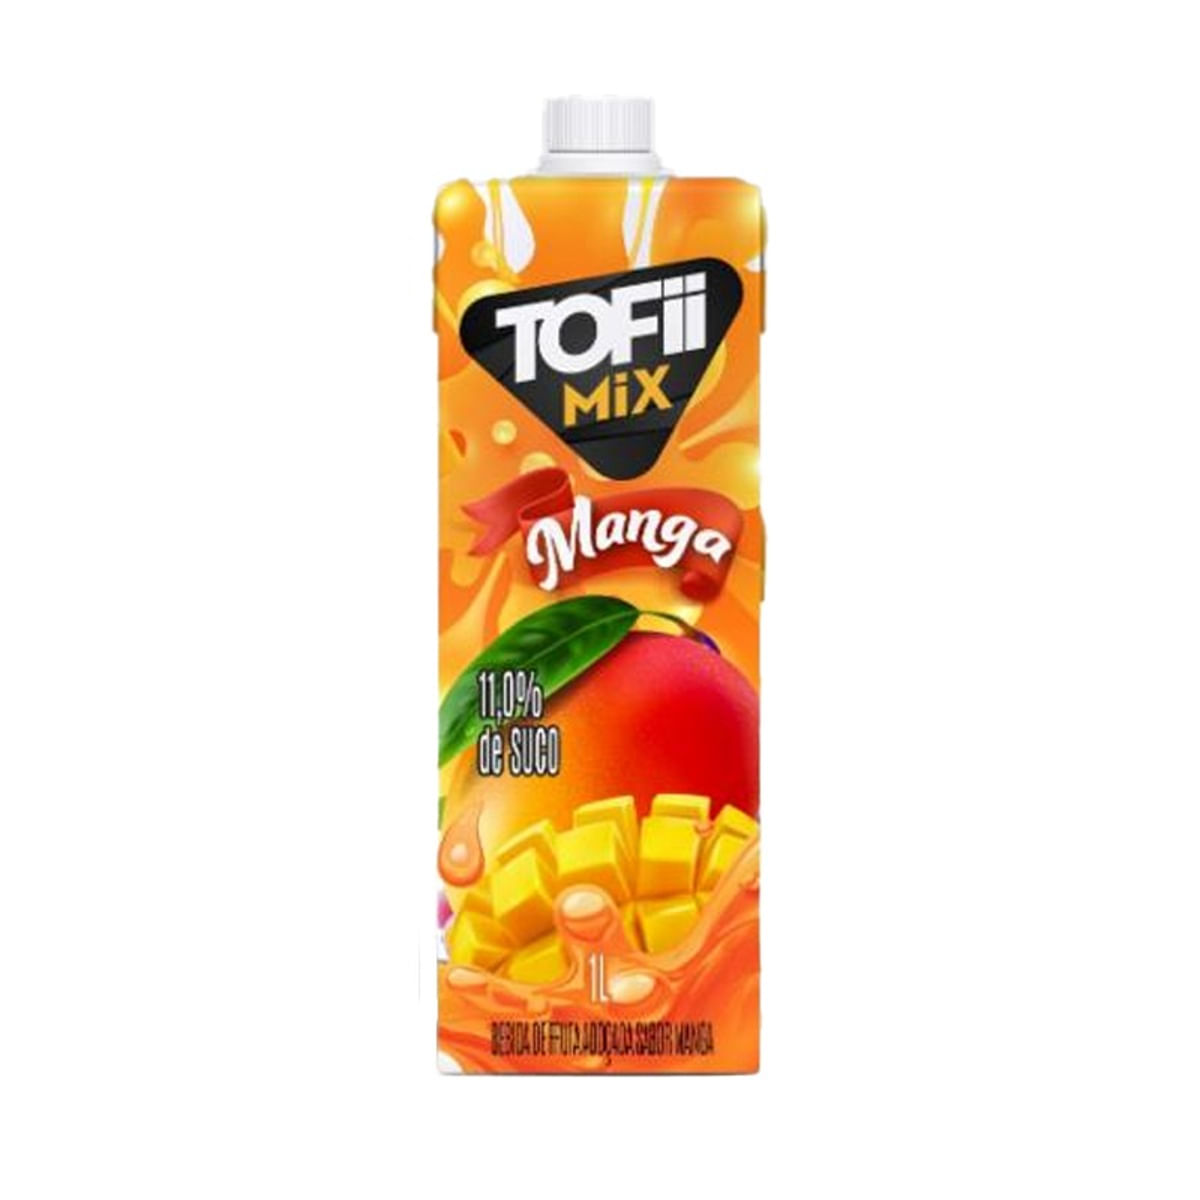 beb-frut-adoc-tofii-mix-mang-1l-1.jpg